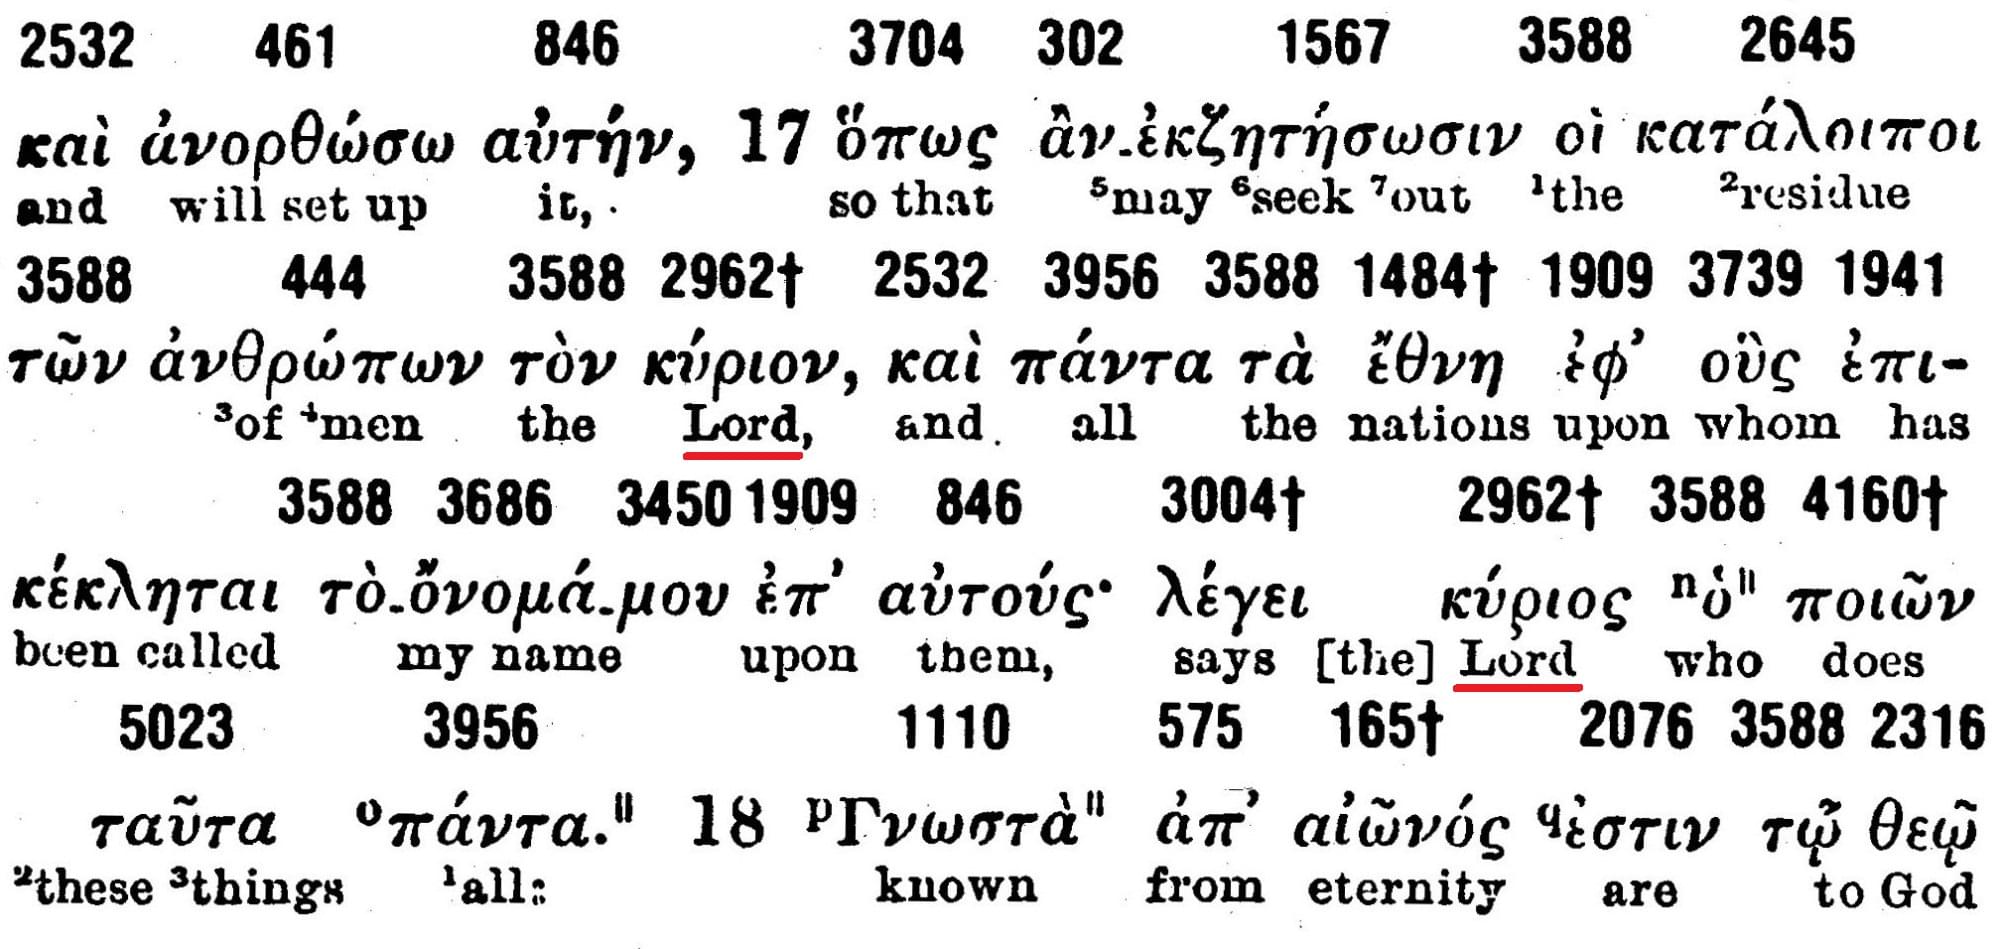 Interlinear Greek English New Testament